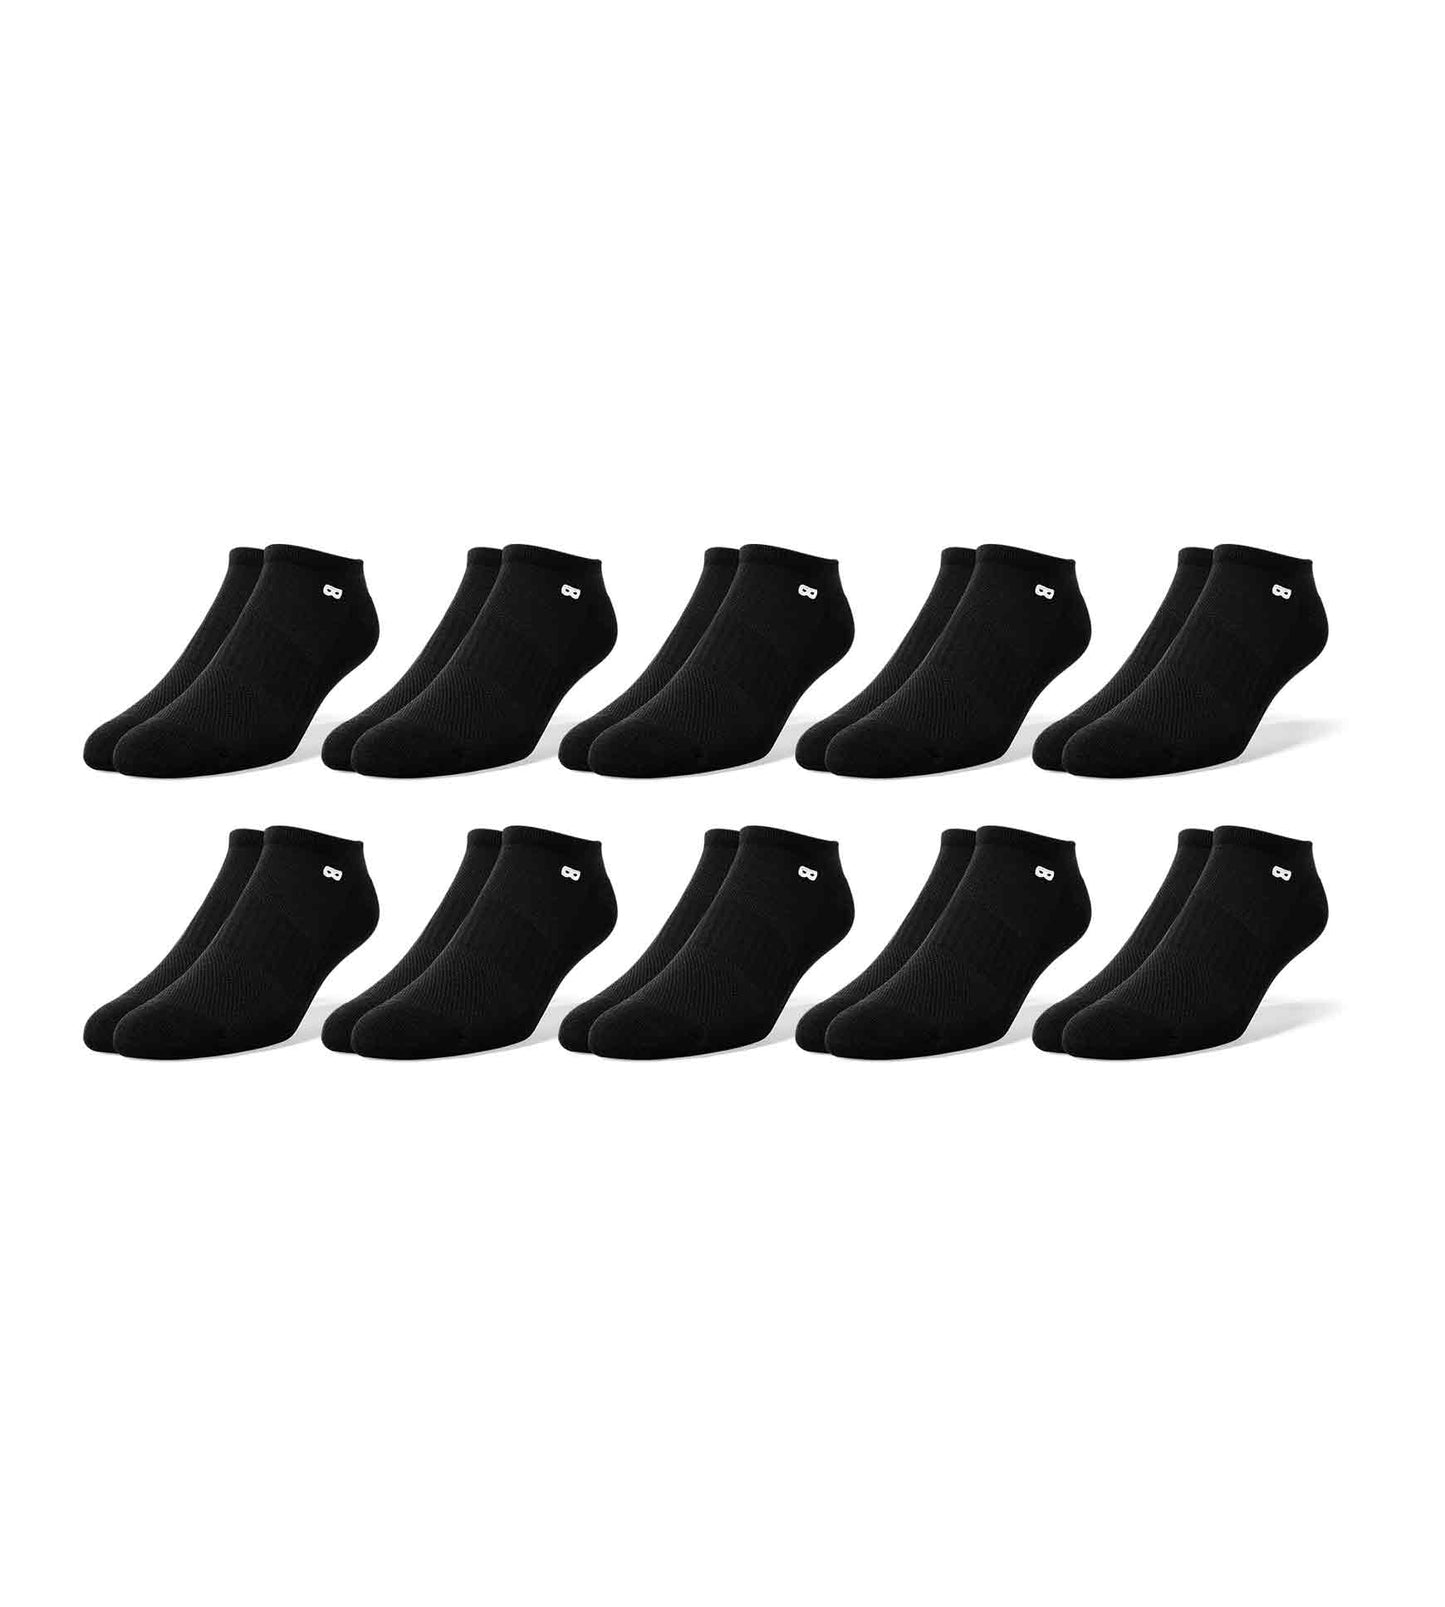 Cushion Low-Cut Socks 10 Pack containing the colors Black, Dark slate gray, Silver, Gray, Dark slate gray, Gains boro, Black, Dim gray, Black